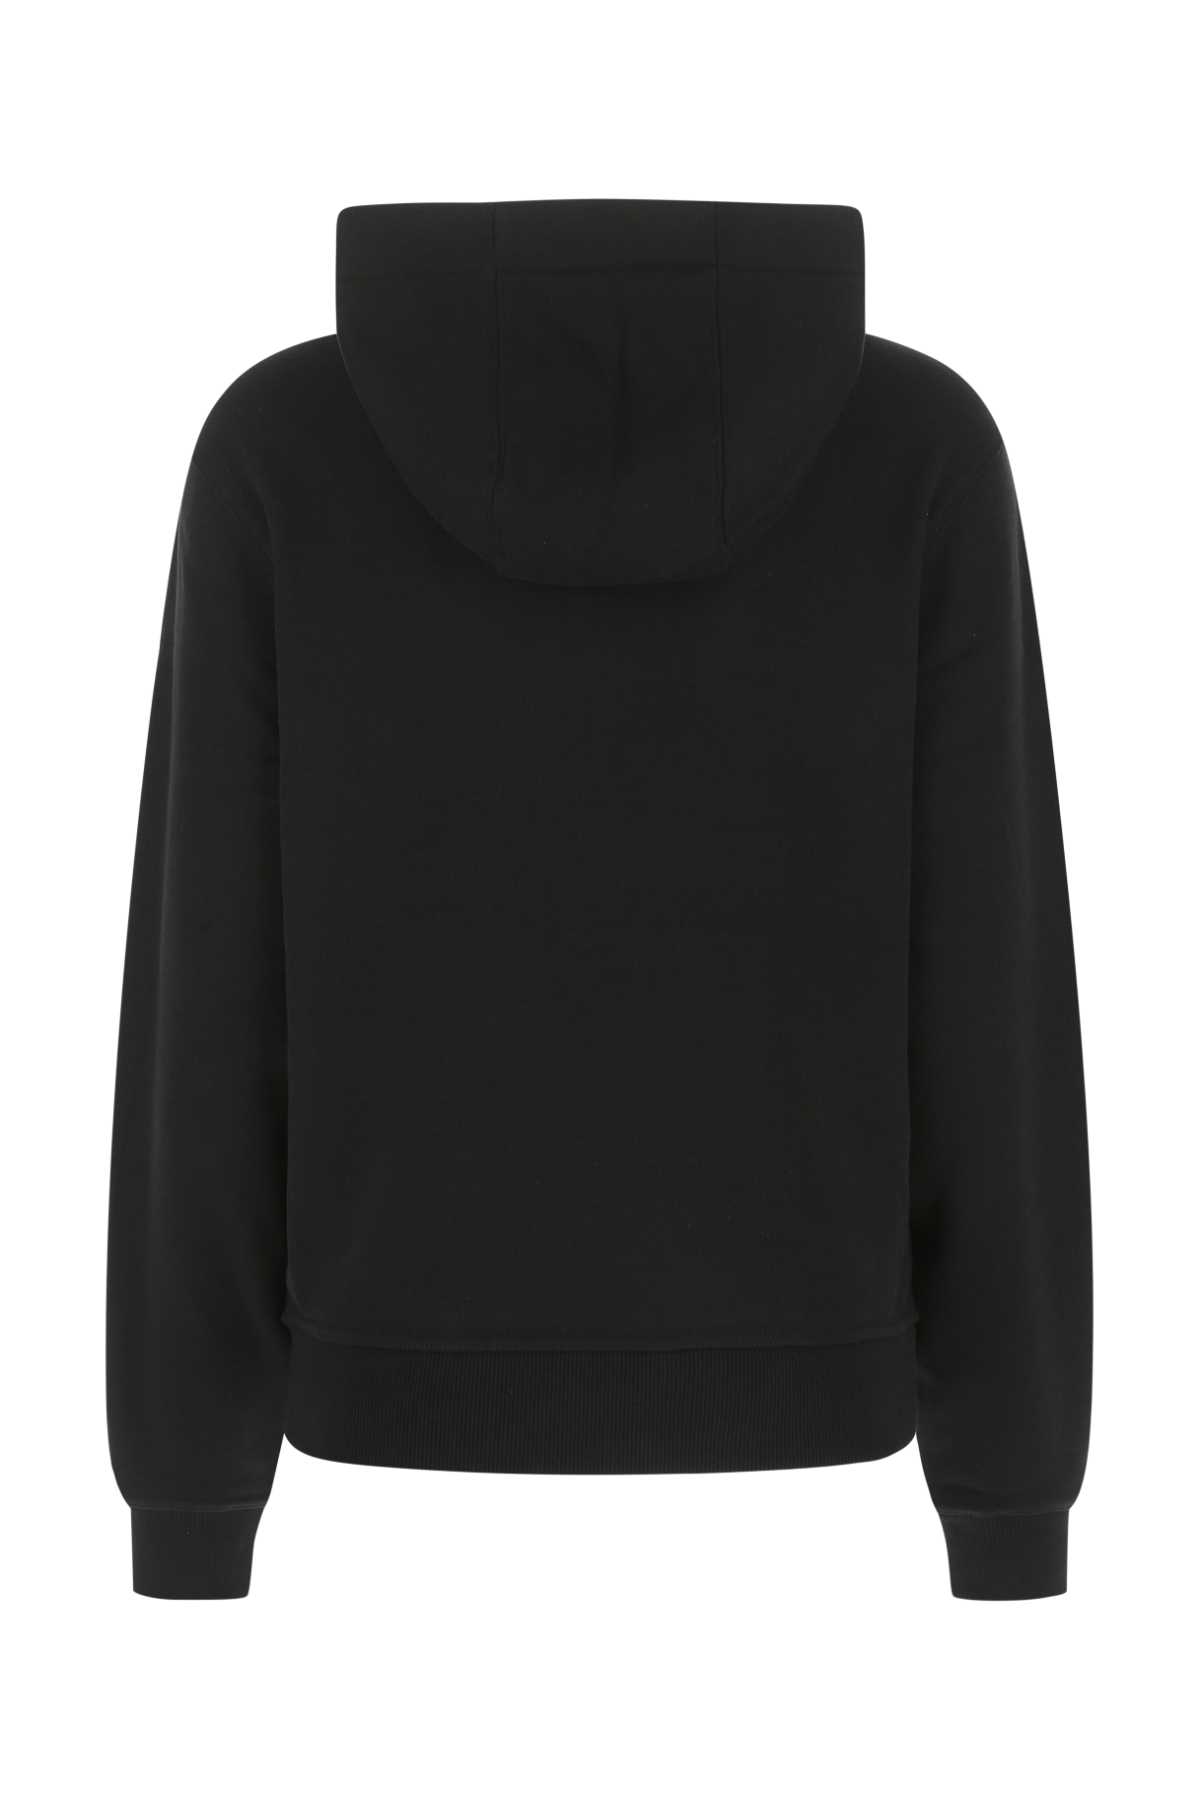 Shop Burberry Black Cotton Oversize Sweatshirt In A1189